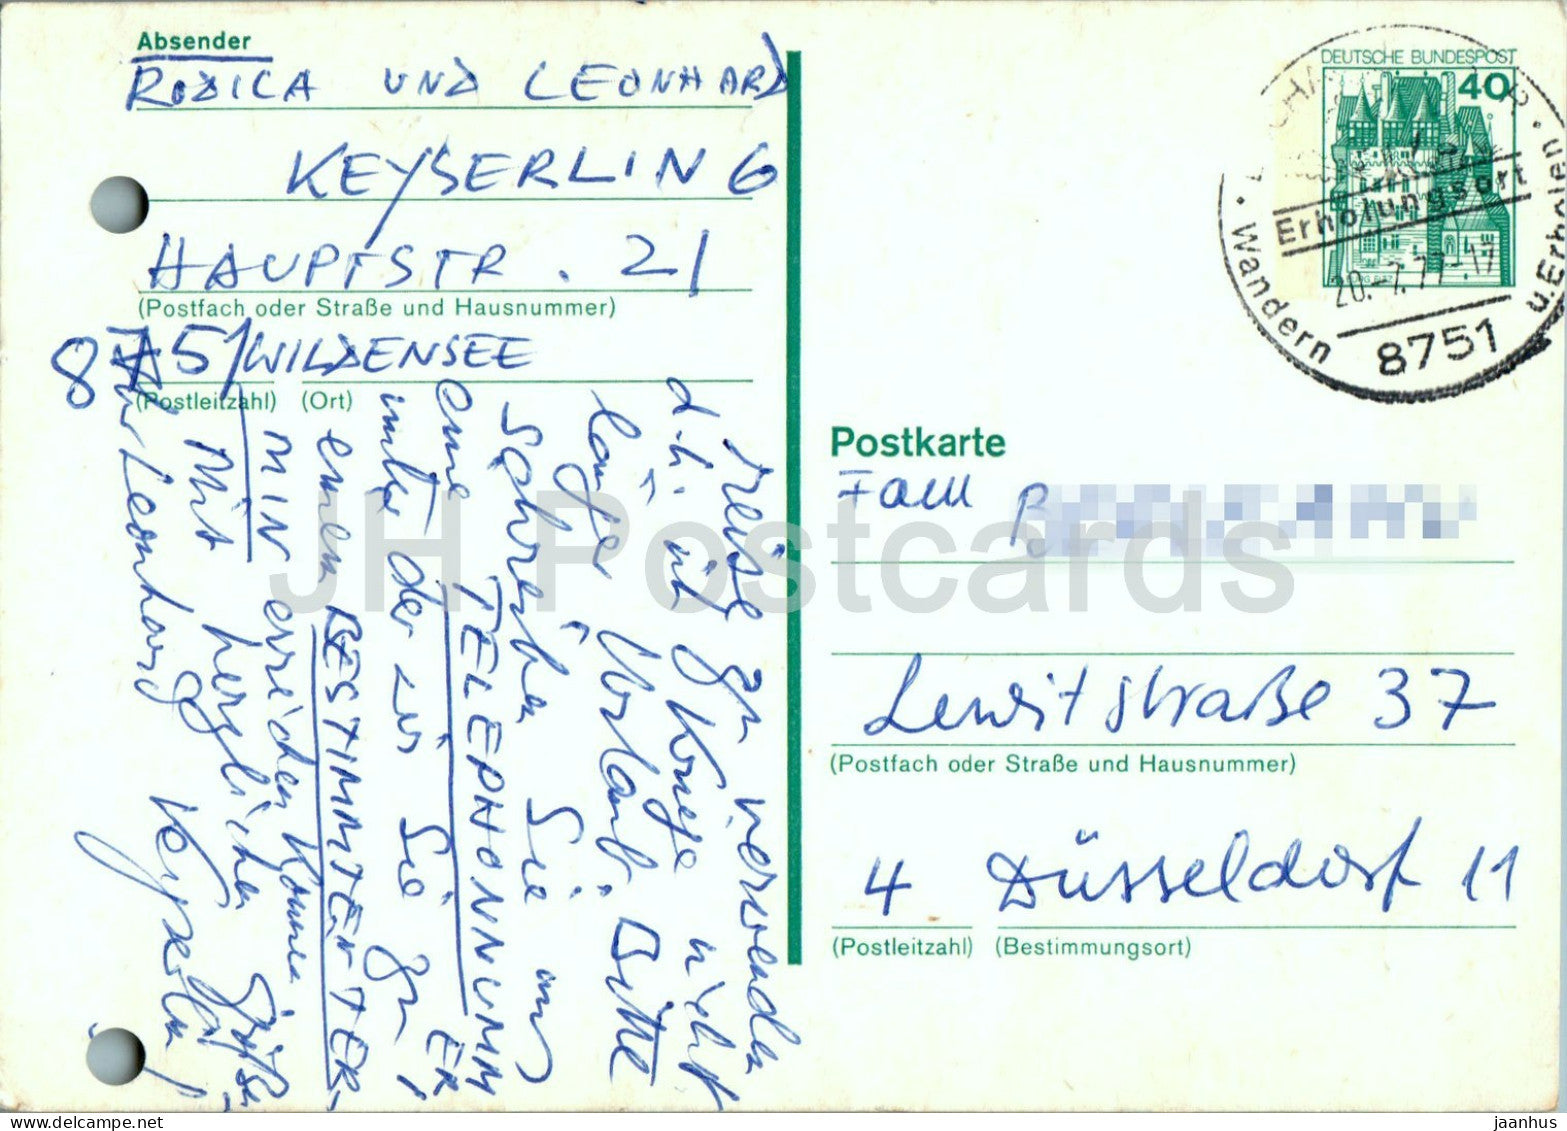 Postkarte - postal stationery - 1977 - Germany - used - JH Postcards